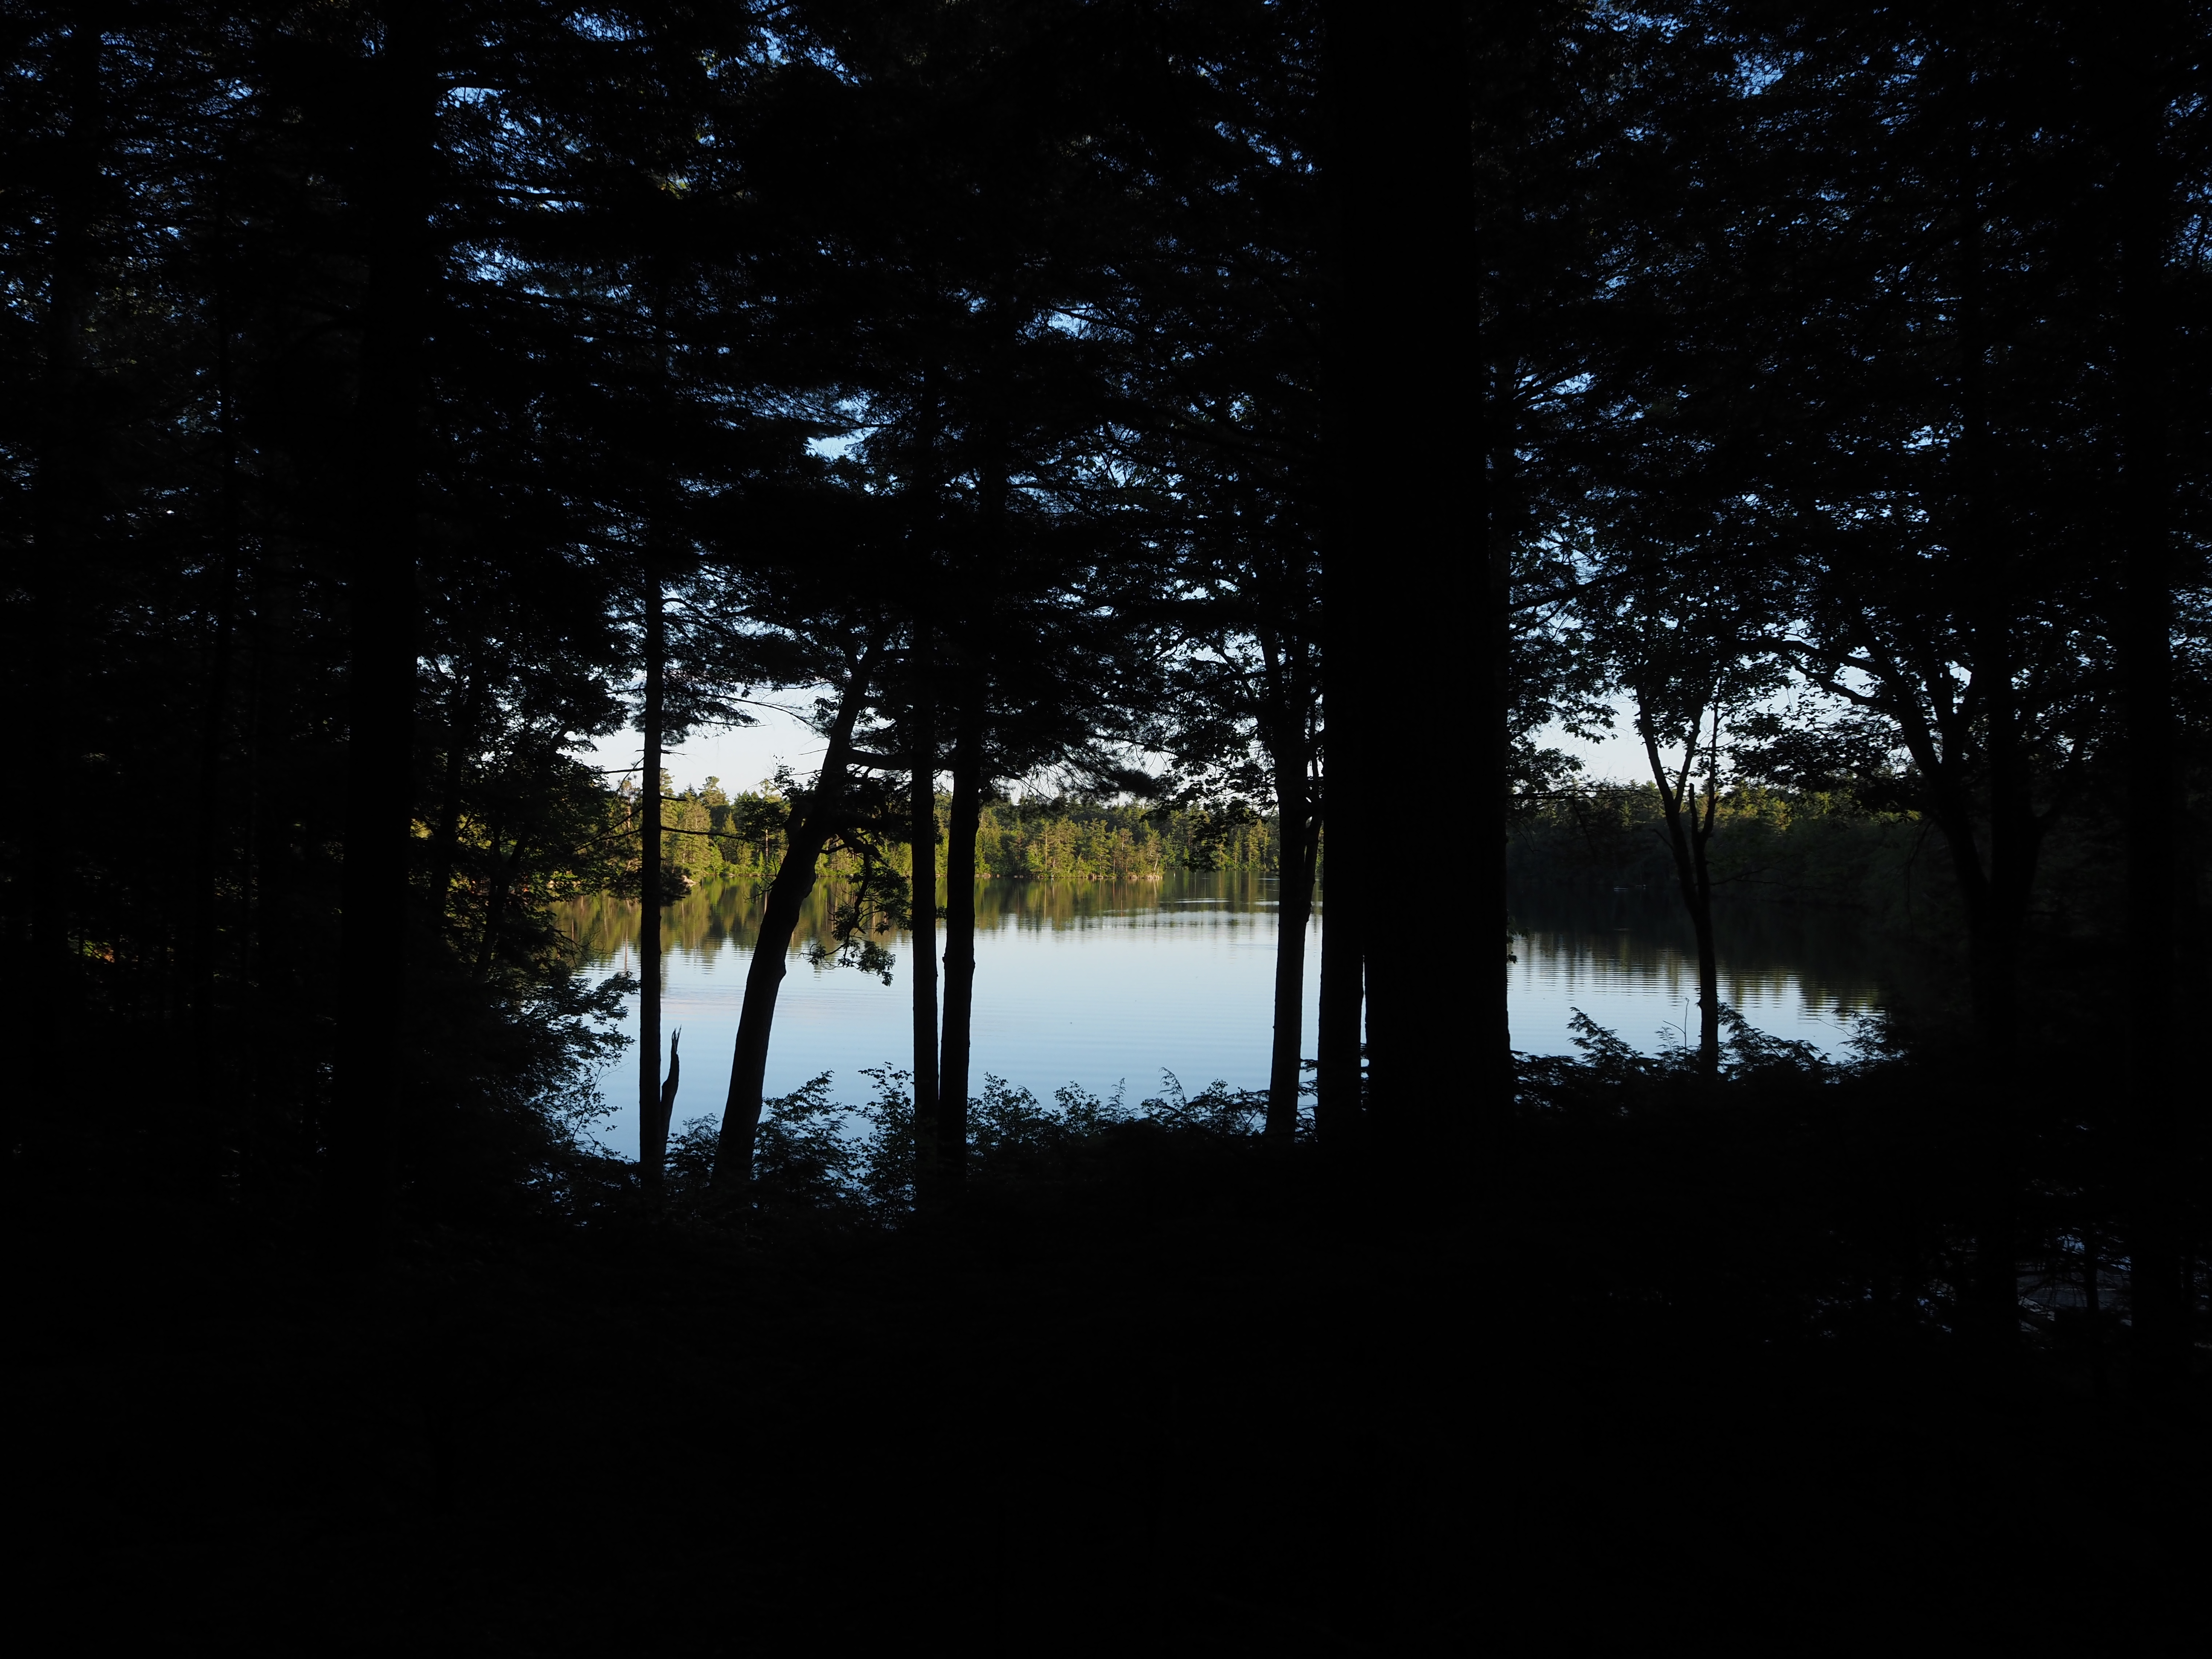 A lake view seen through trees